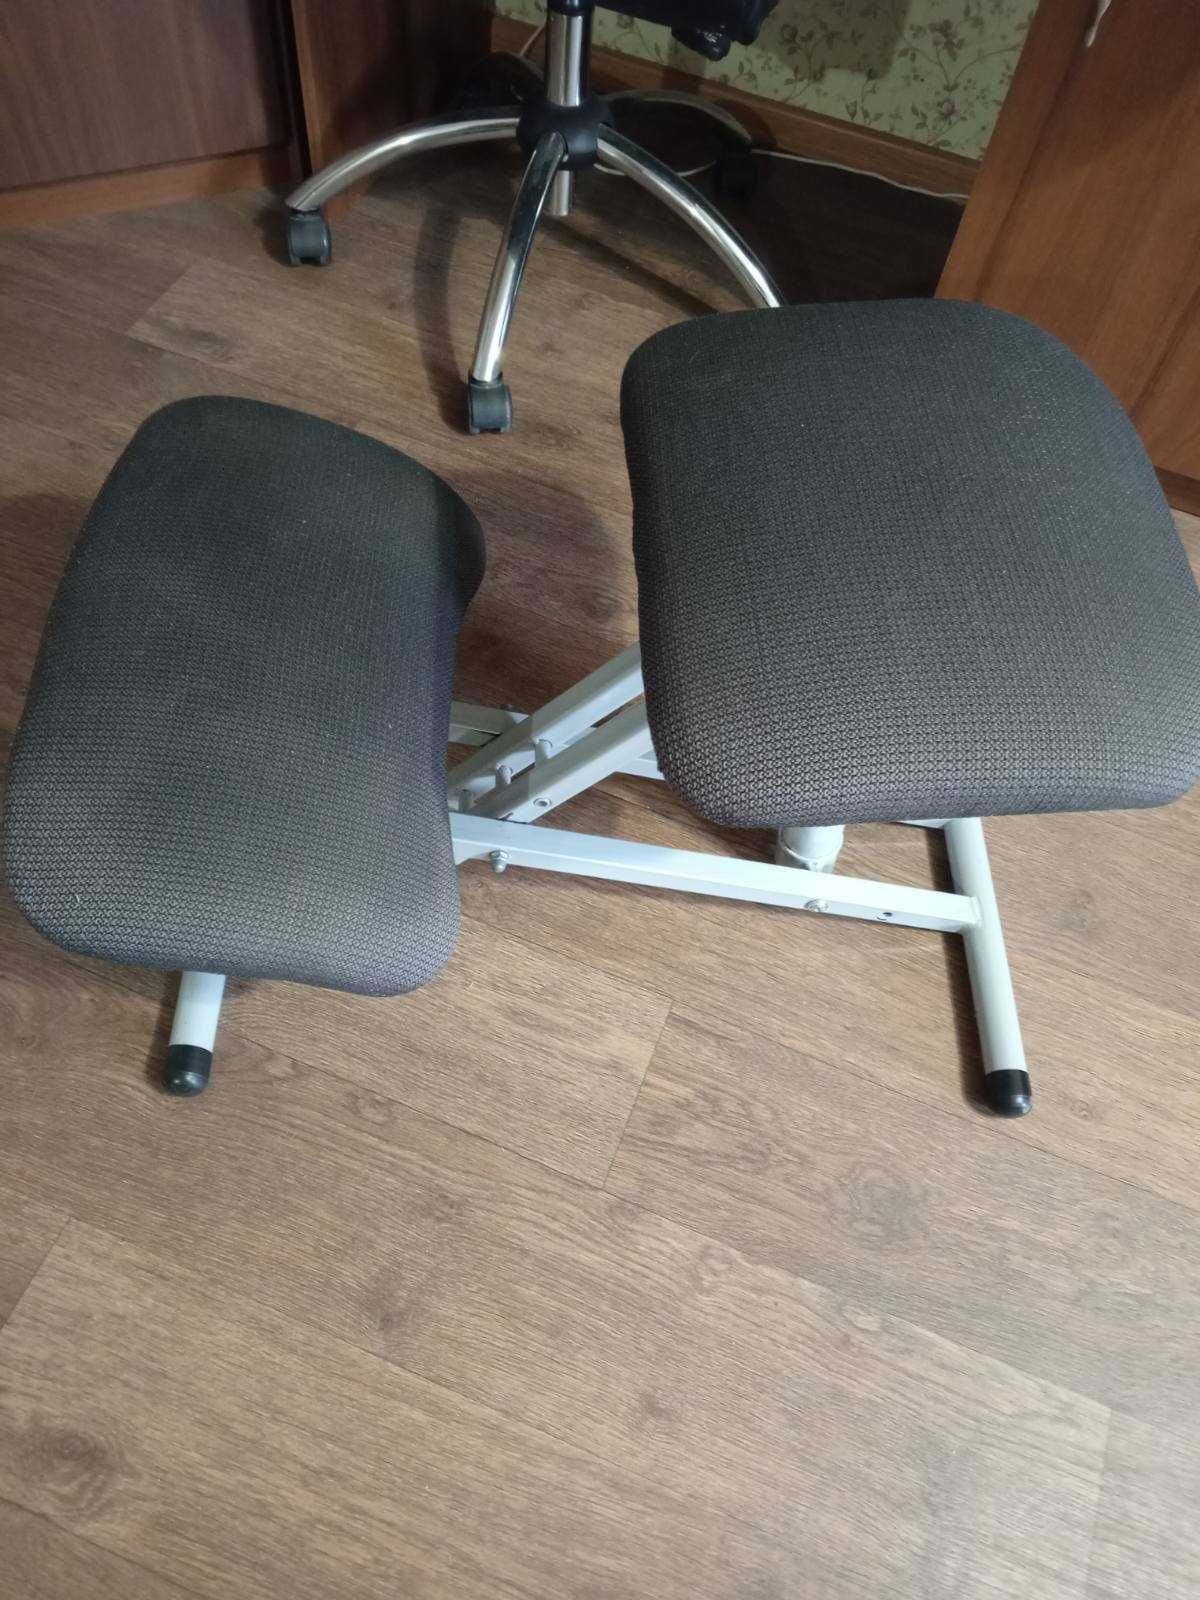 Ортопедический коленный стул для правильной осанки. Колінний стілець.